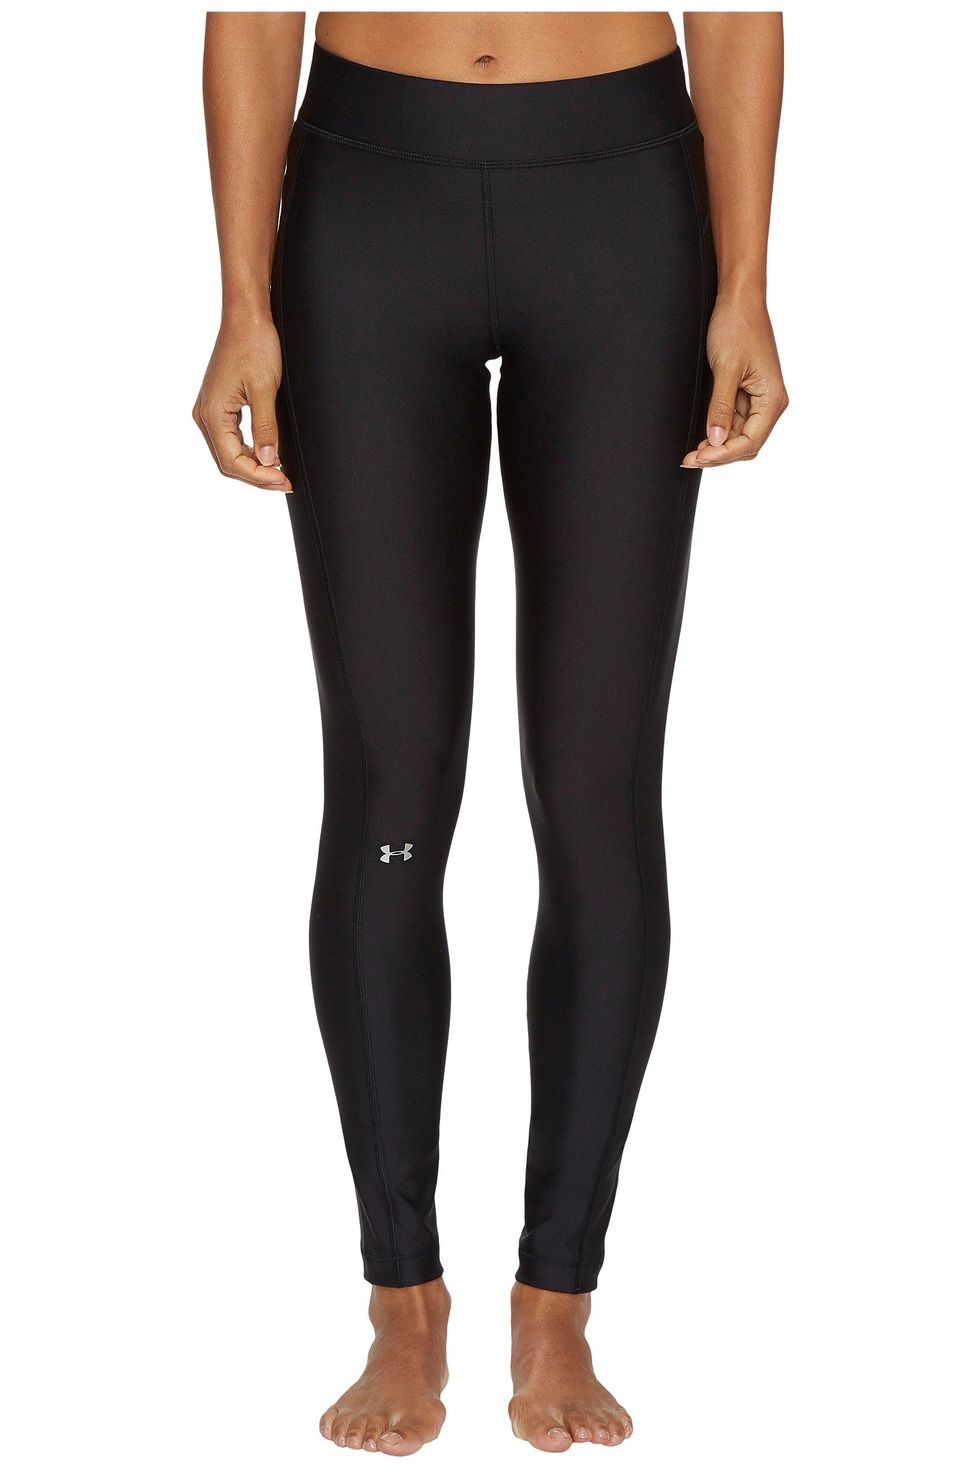 BETABRAND Women’s 2x Long Black Straight Leg Classic Dress Pant Yoga Pants  $68